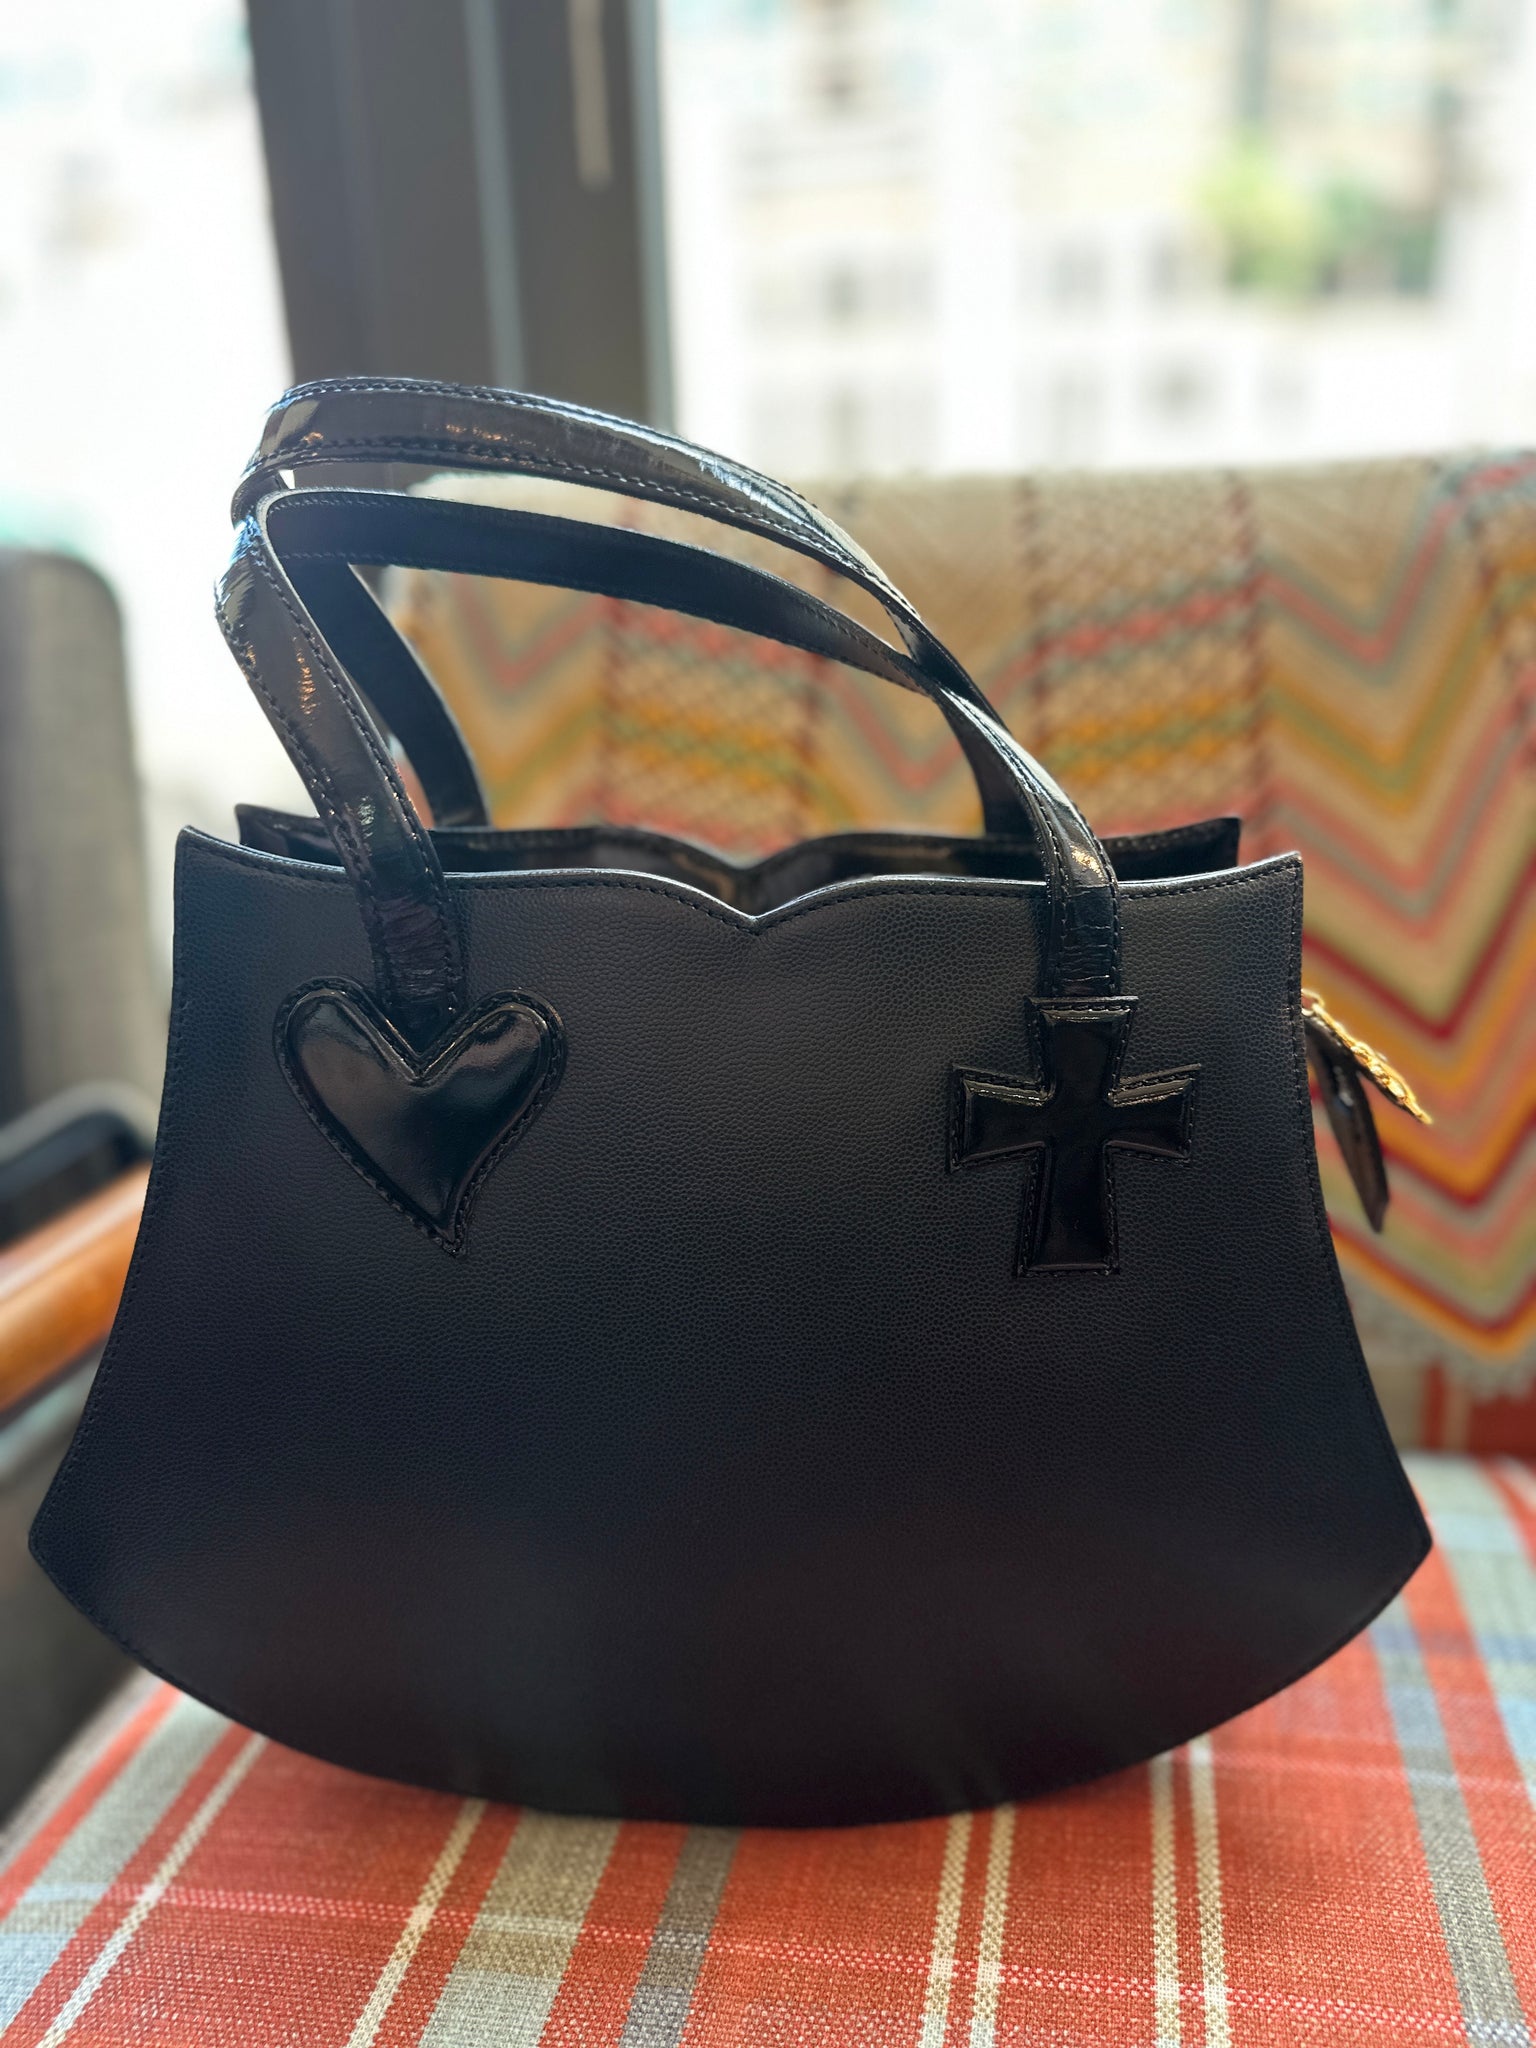 Buy Christian Lacroix Bag Made in Italy, Rare Bag, New Black Satin Bag,  Shoulder Bag, Clutch Bag, Handbag for Women, Vintage Rhinestone, Online in  India - Etsy